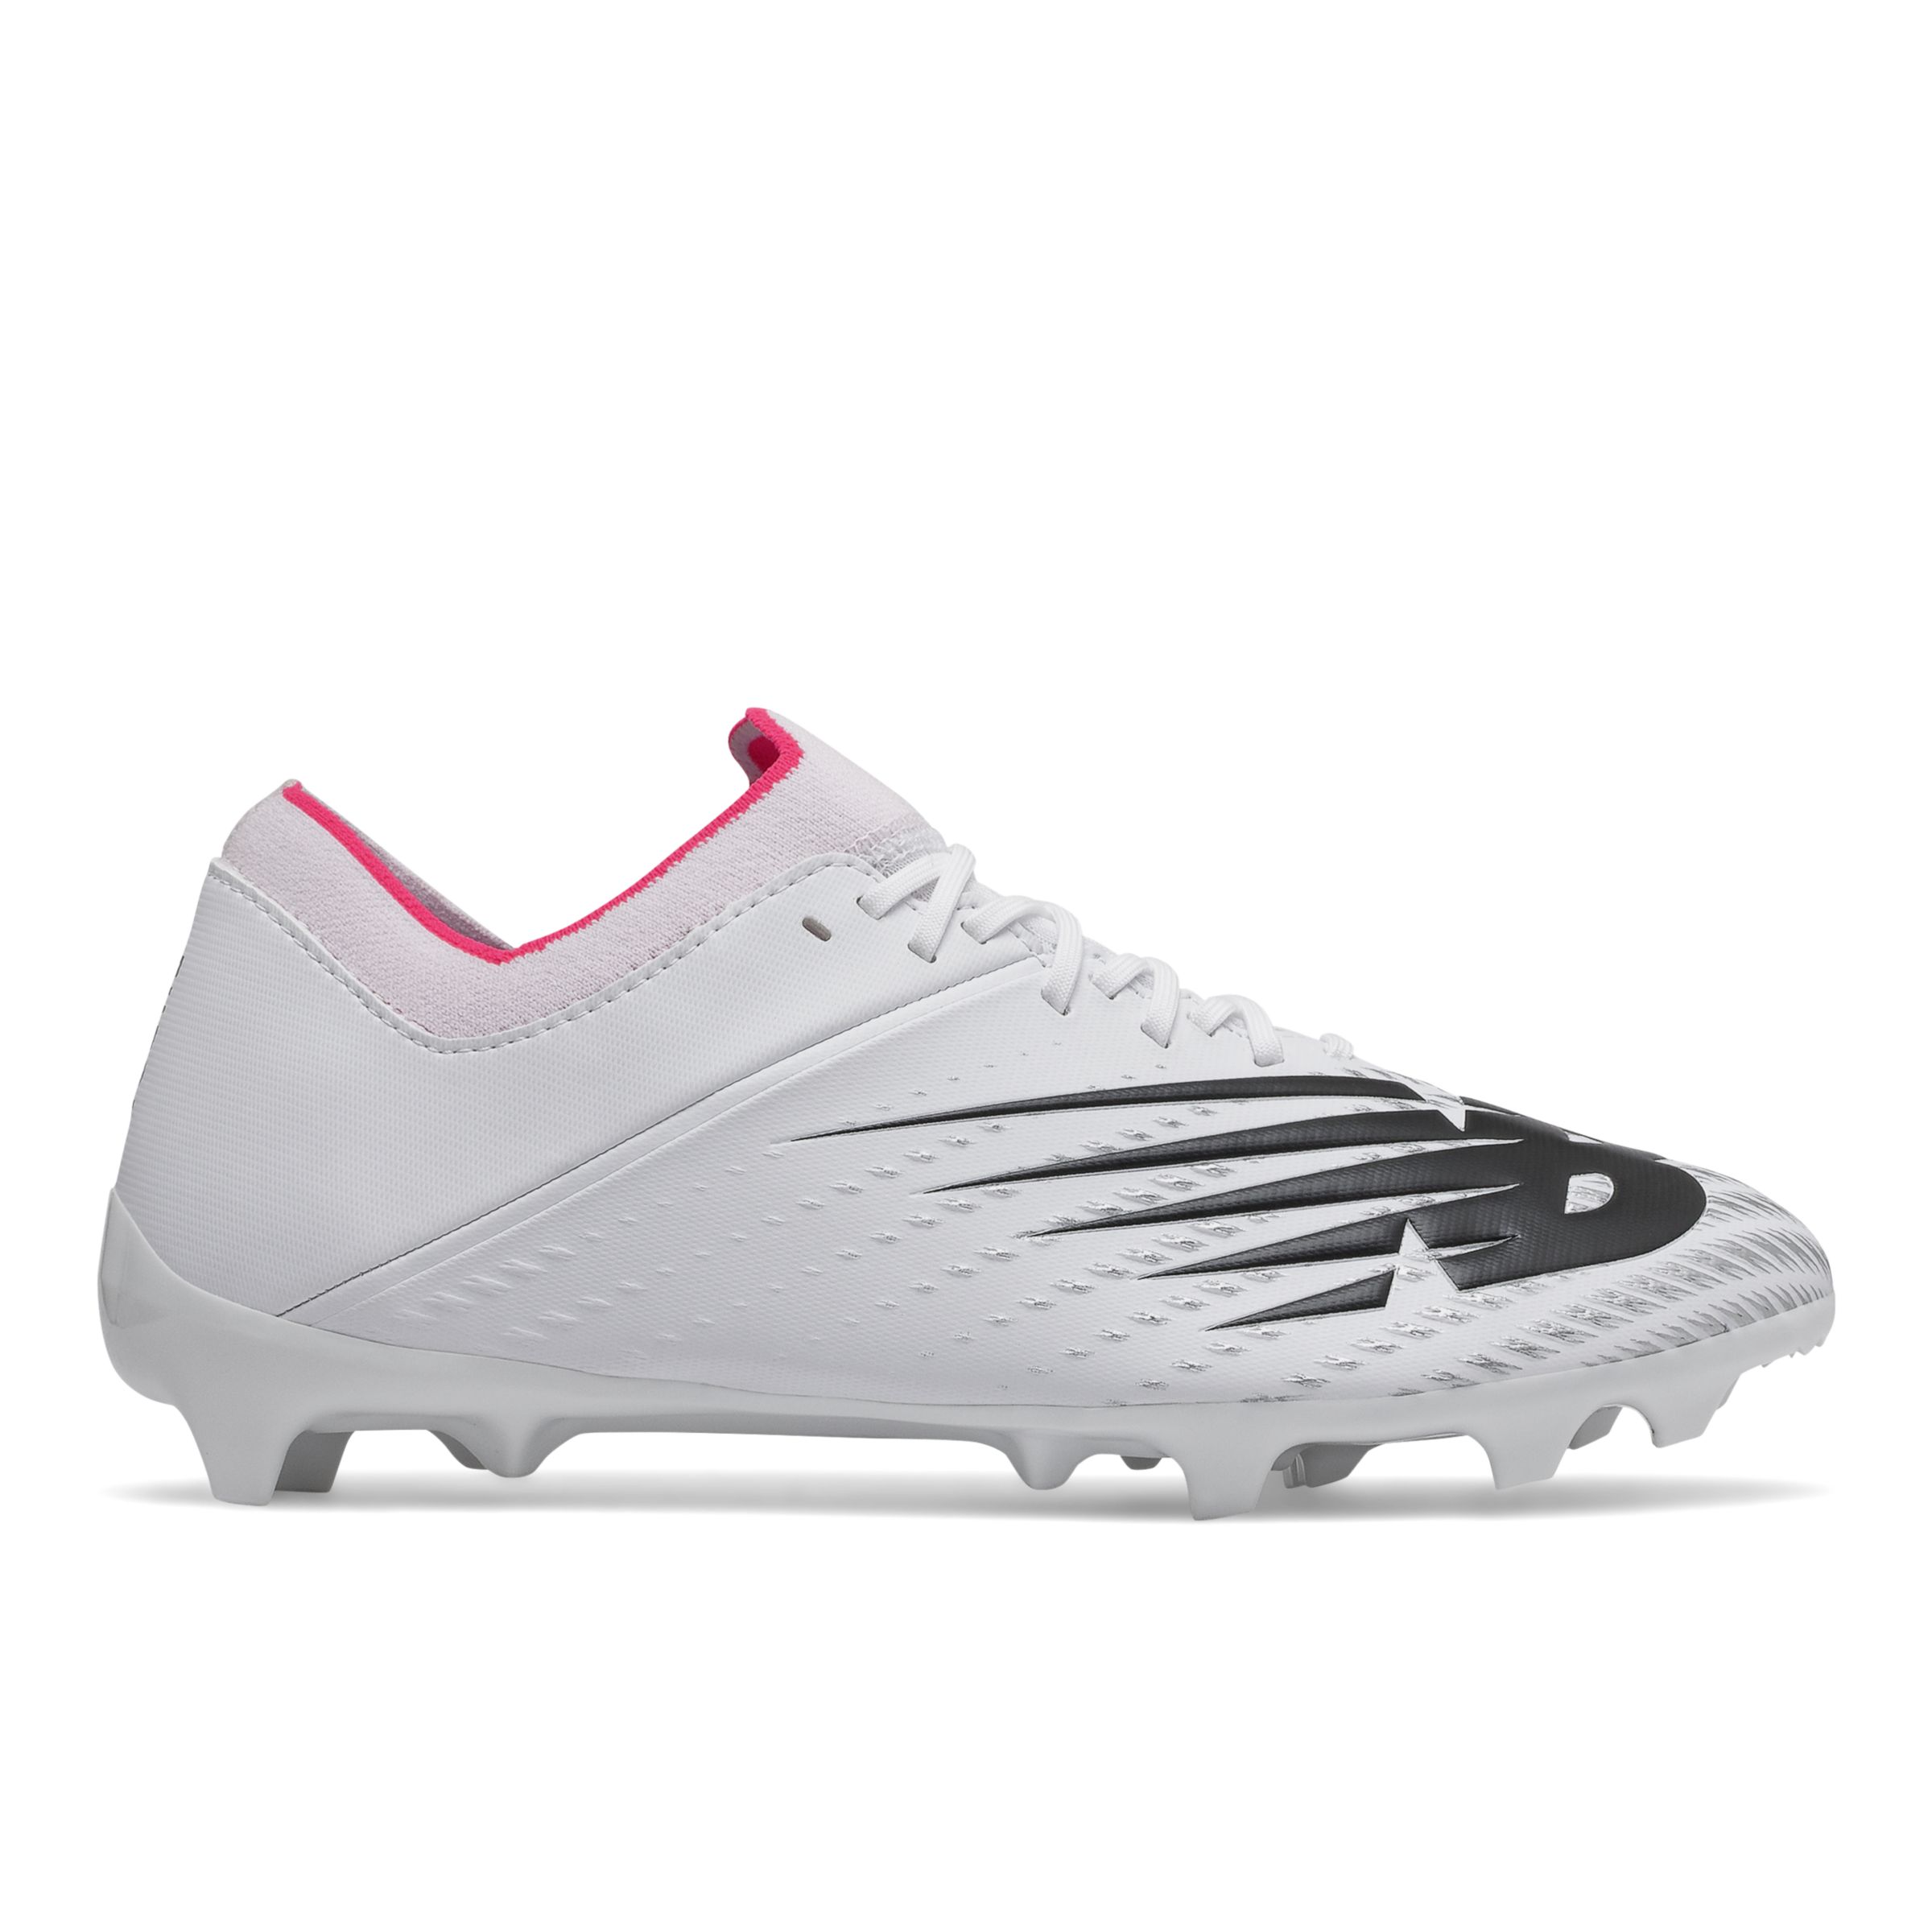 Men's Footwear New Balance Furoon V6+ Dispatch FG - Hombres EU 40.5, White/Grey/Pink